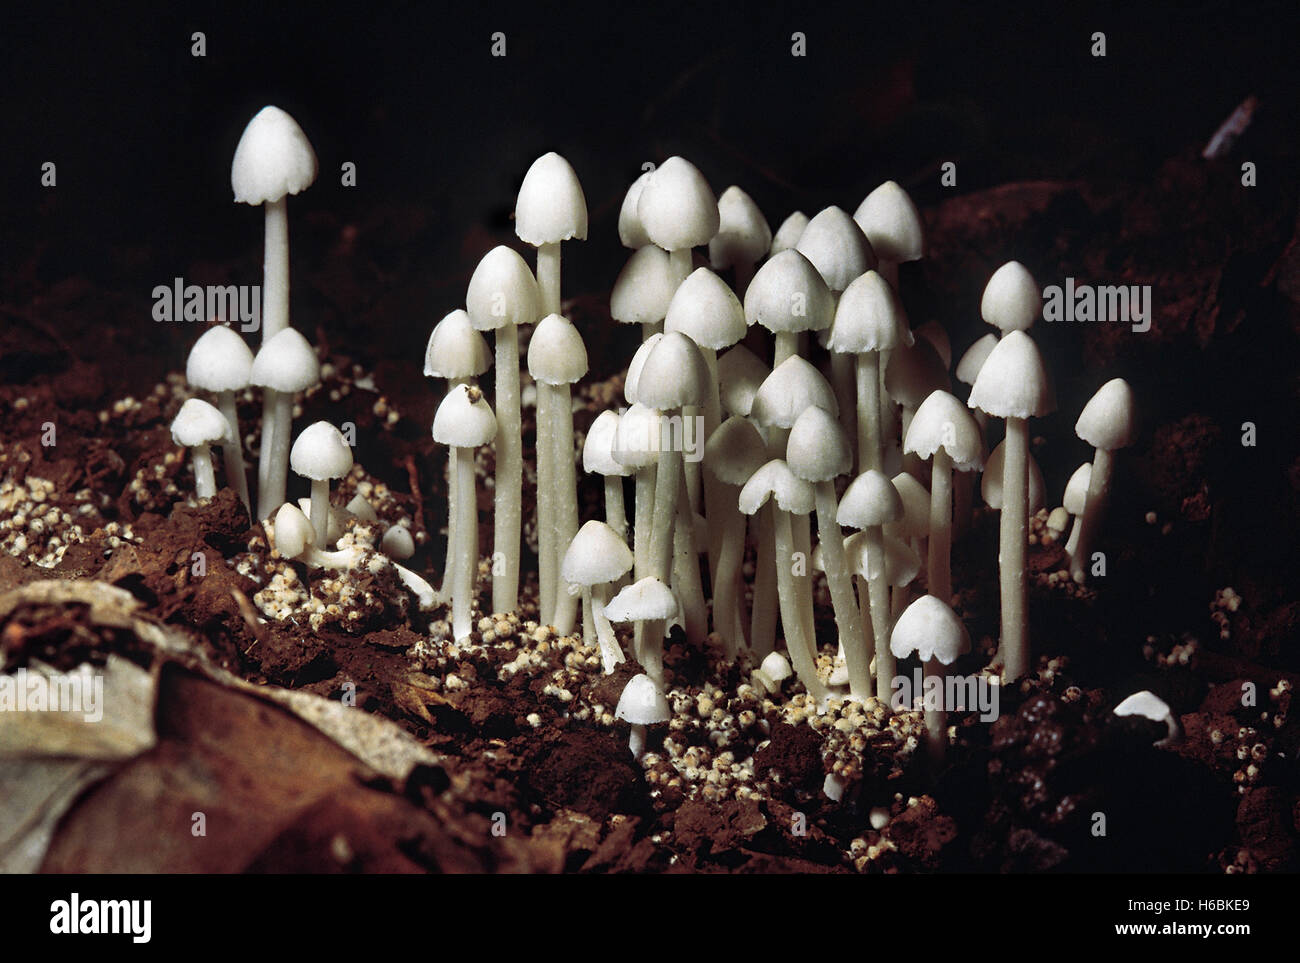 Termitomyces sp. Termite Hill mushroom (small). Class: Homobasidiomycetes . Series: Hymenomycetes. Order: Agaricales. Stock Photo